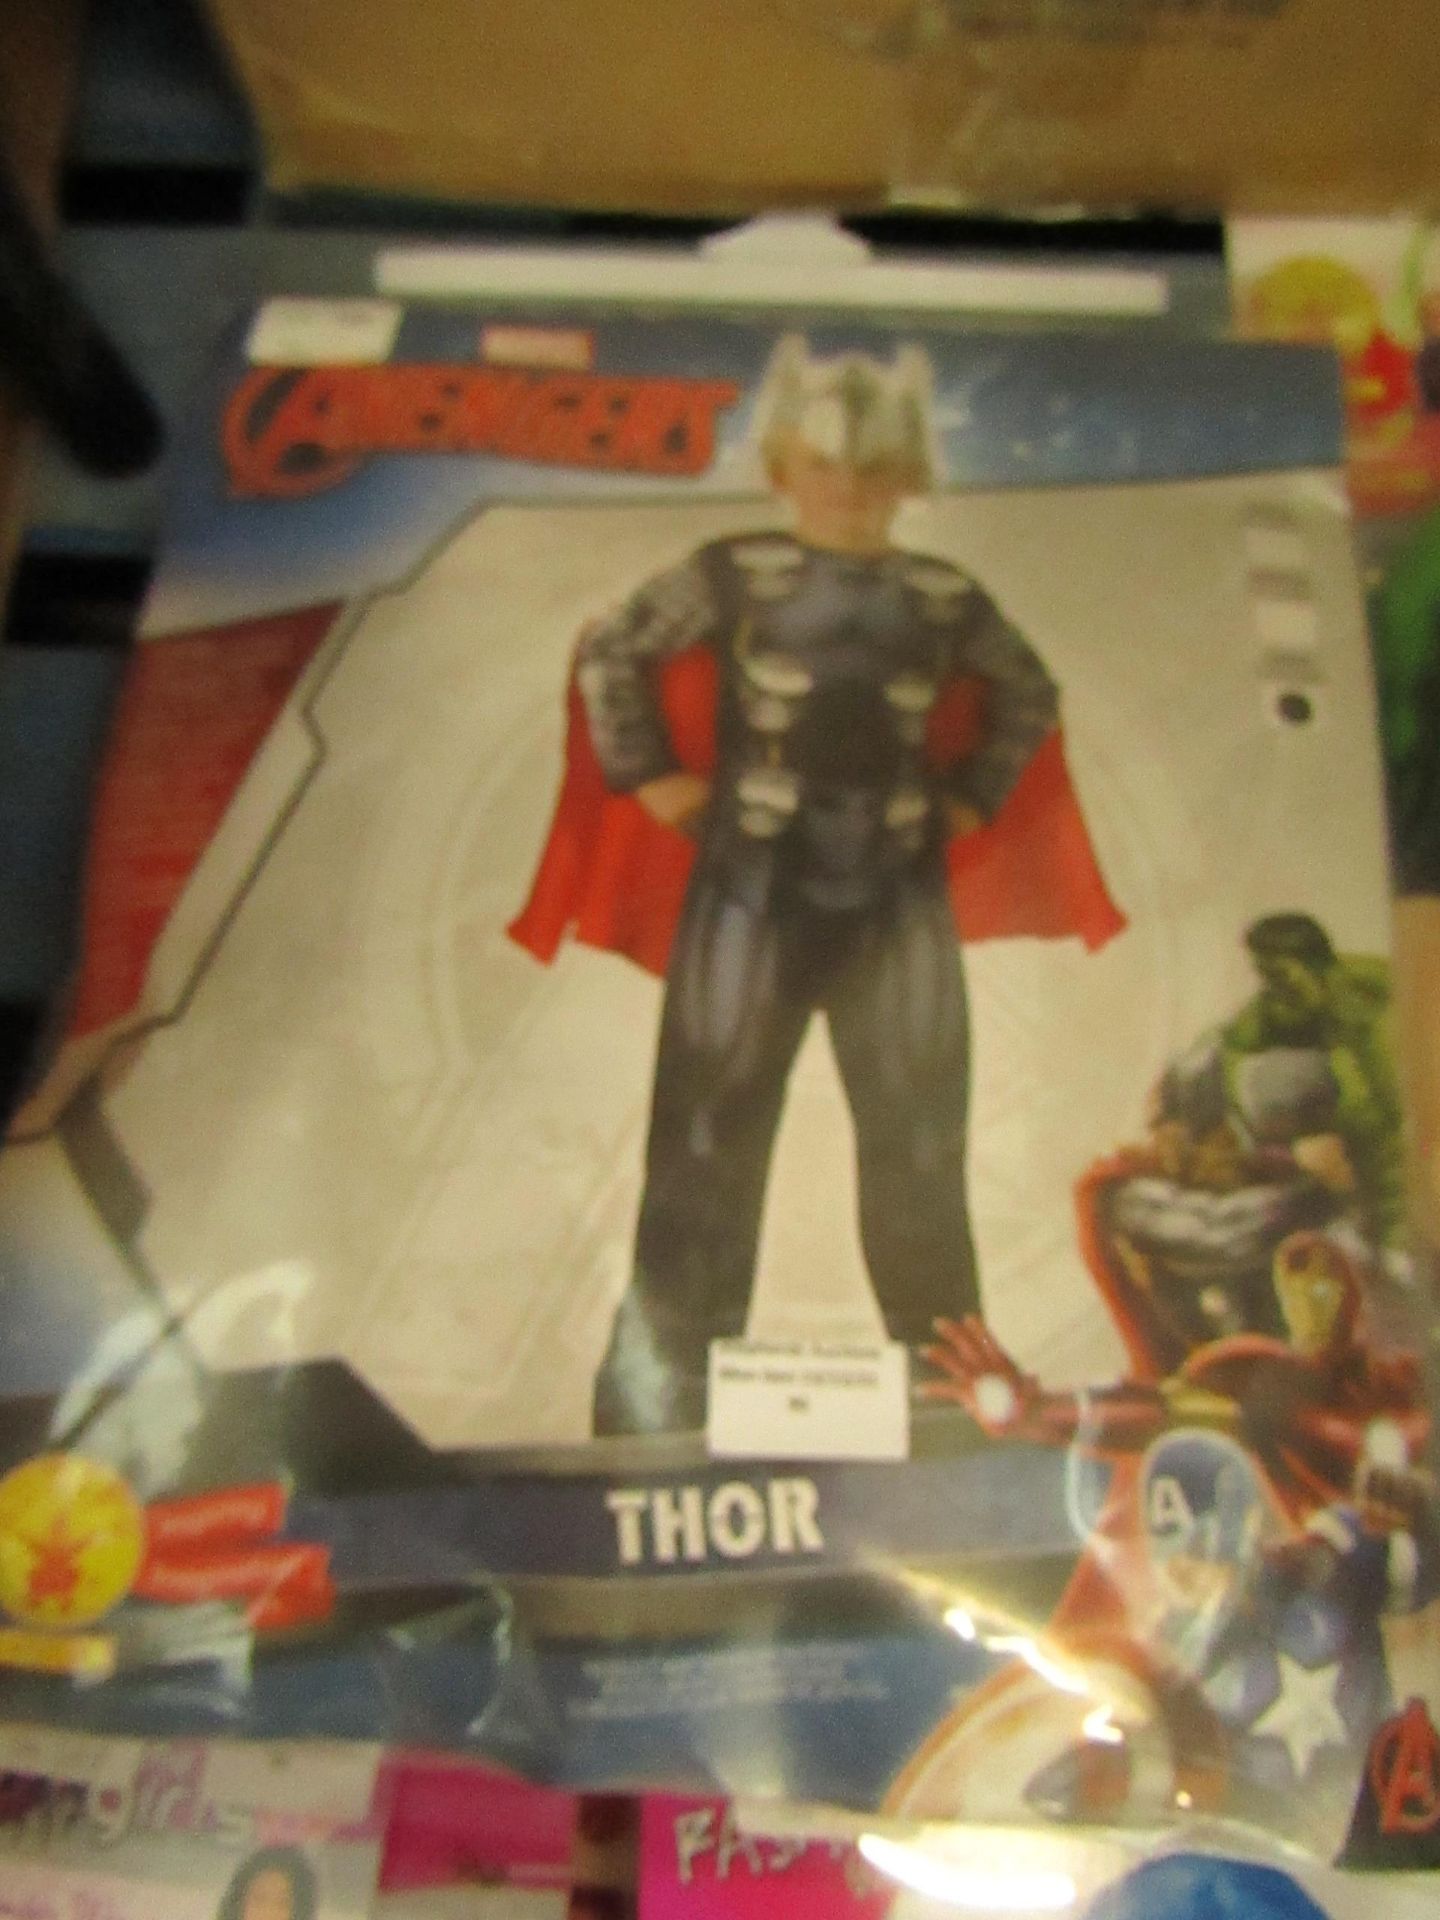 Marvel Avengers - Thor Dressing-Up Costume - Size Large 7-8 Years - Unused & Packaged.